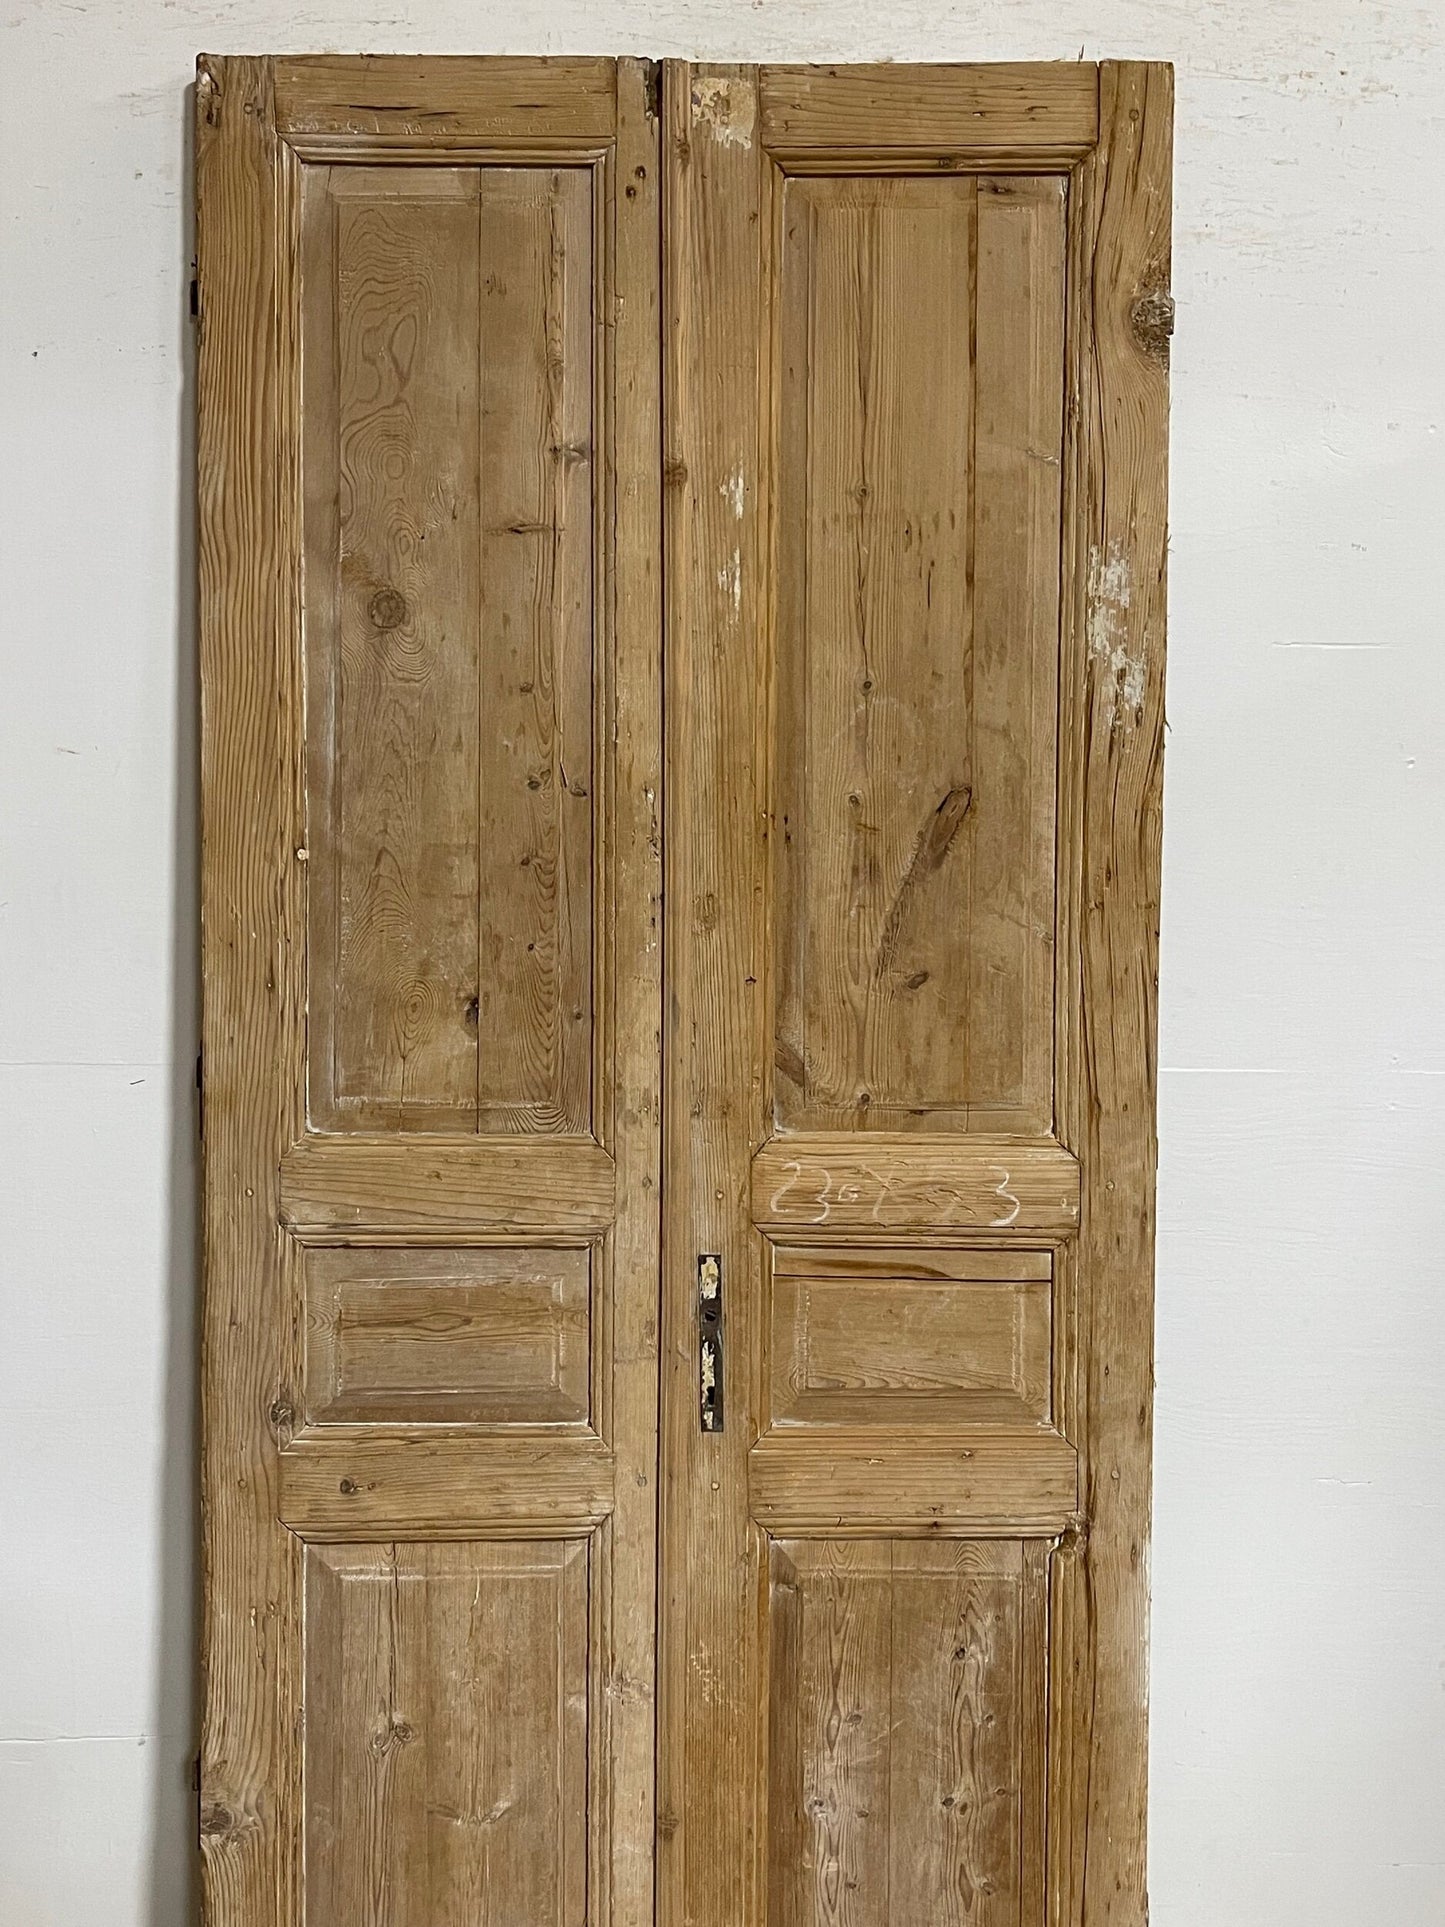 Antique French panel doors (91x41) I07